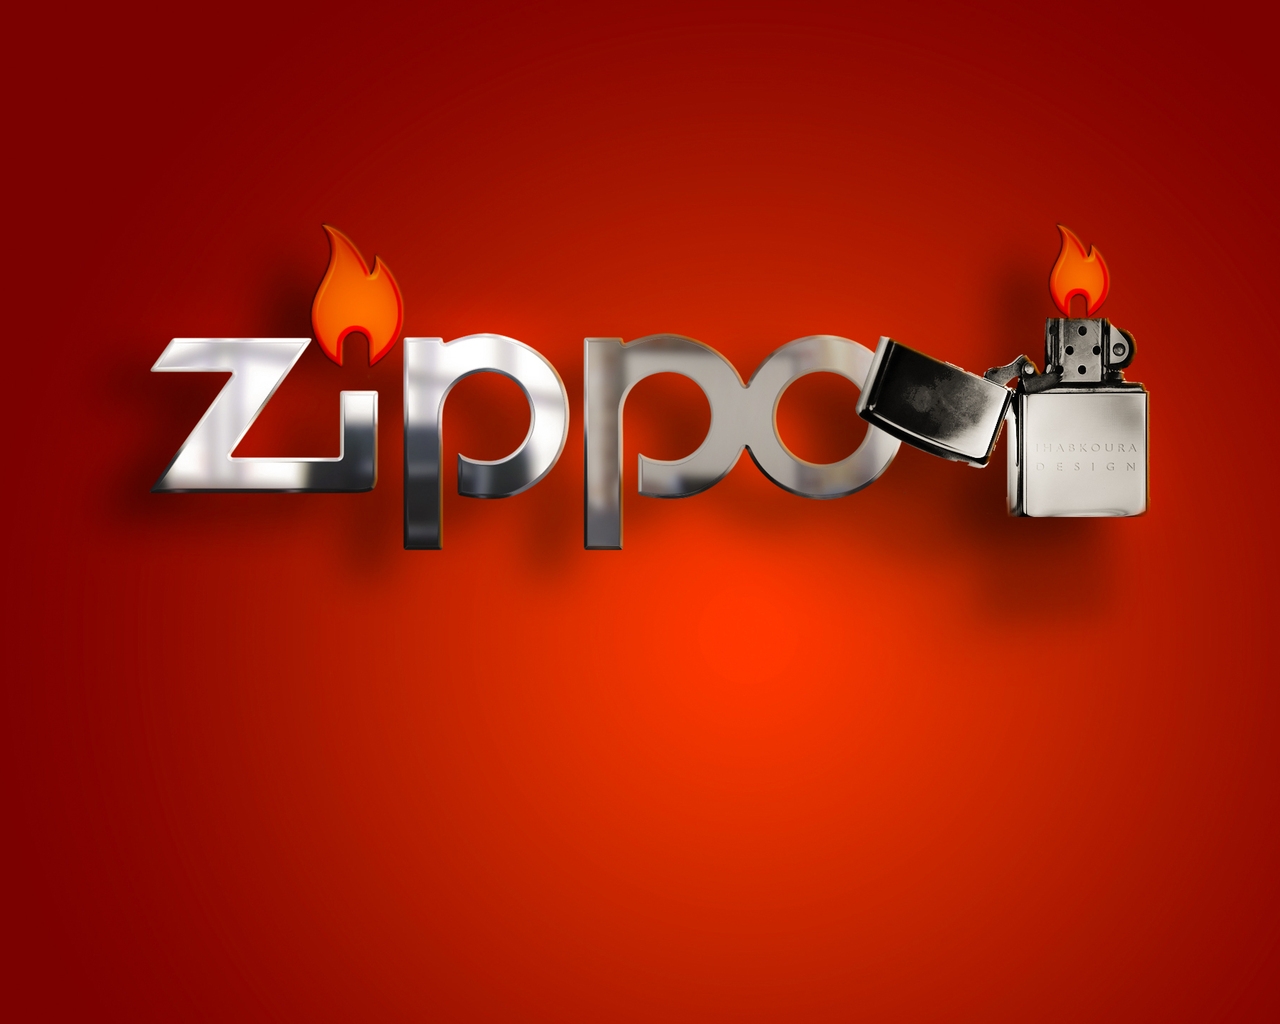 Zippo Lighter for 1280 x 1024 resolution